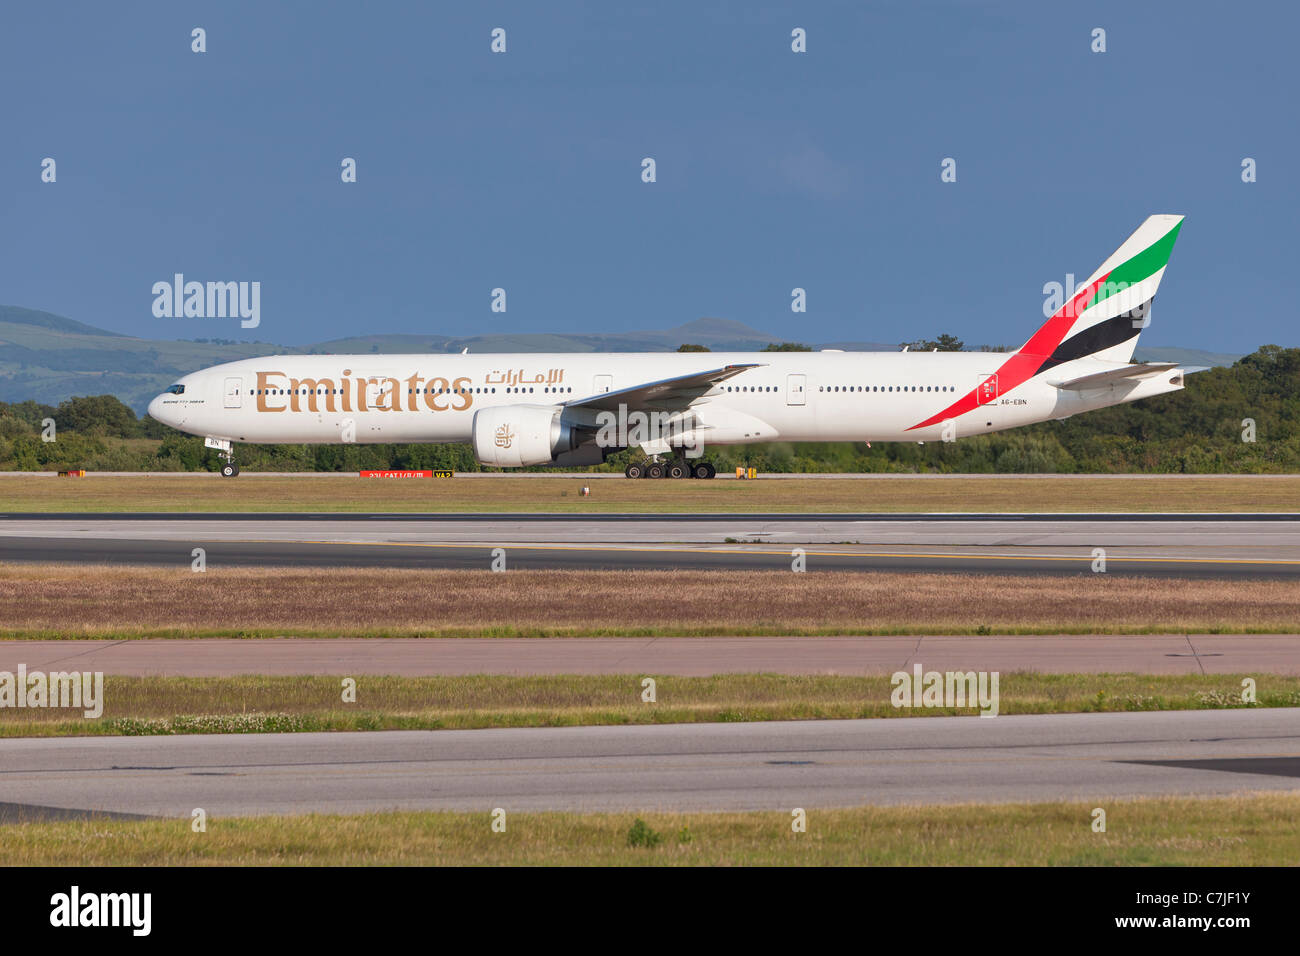 Emirates Airlines aviones, Inglaterra Foto de stock